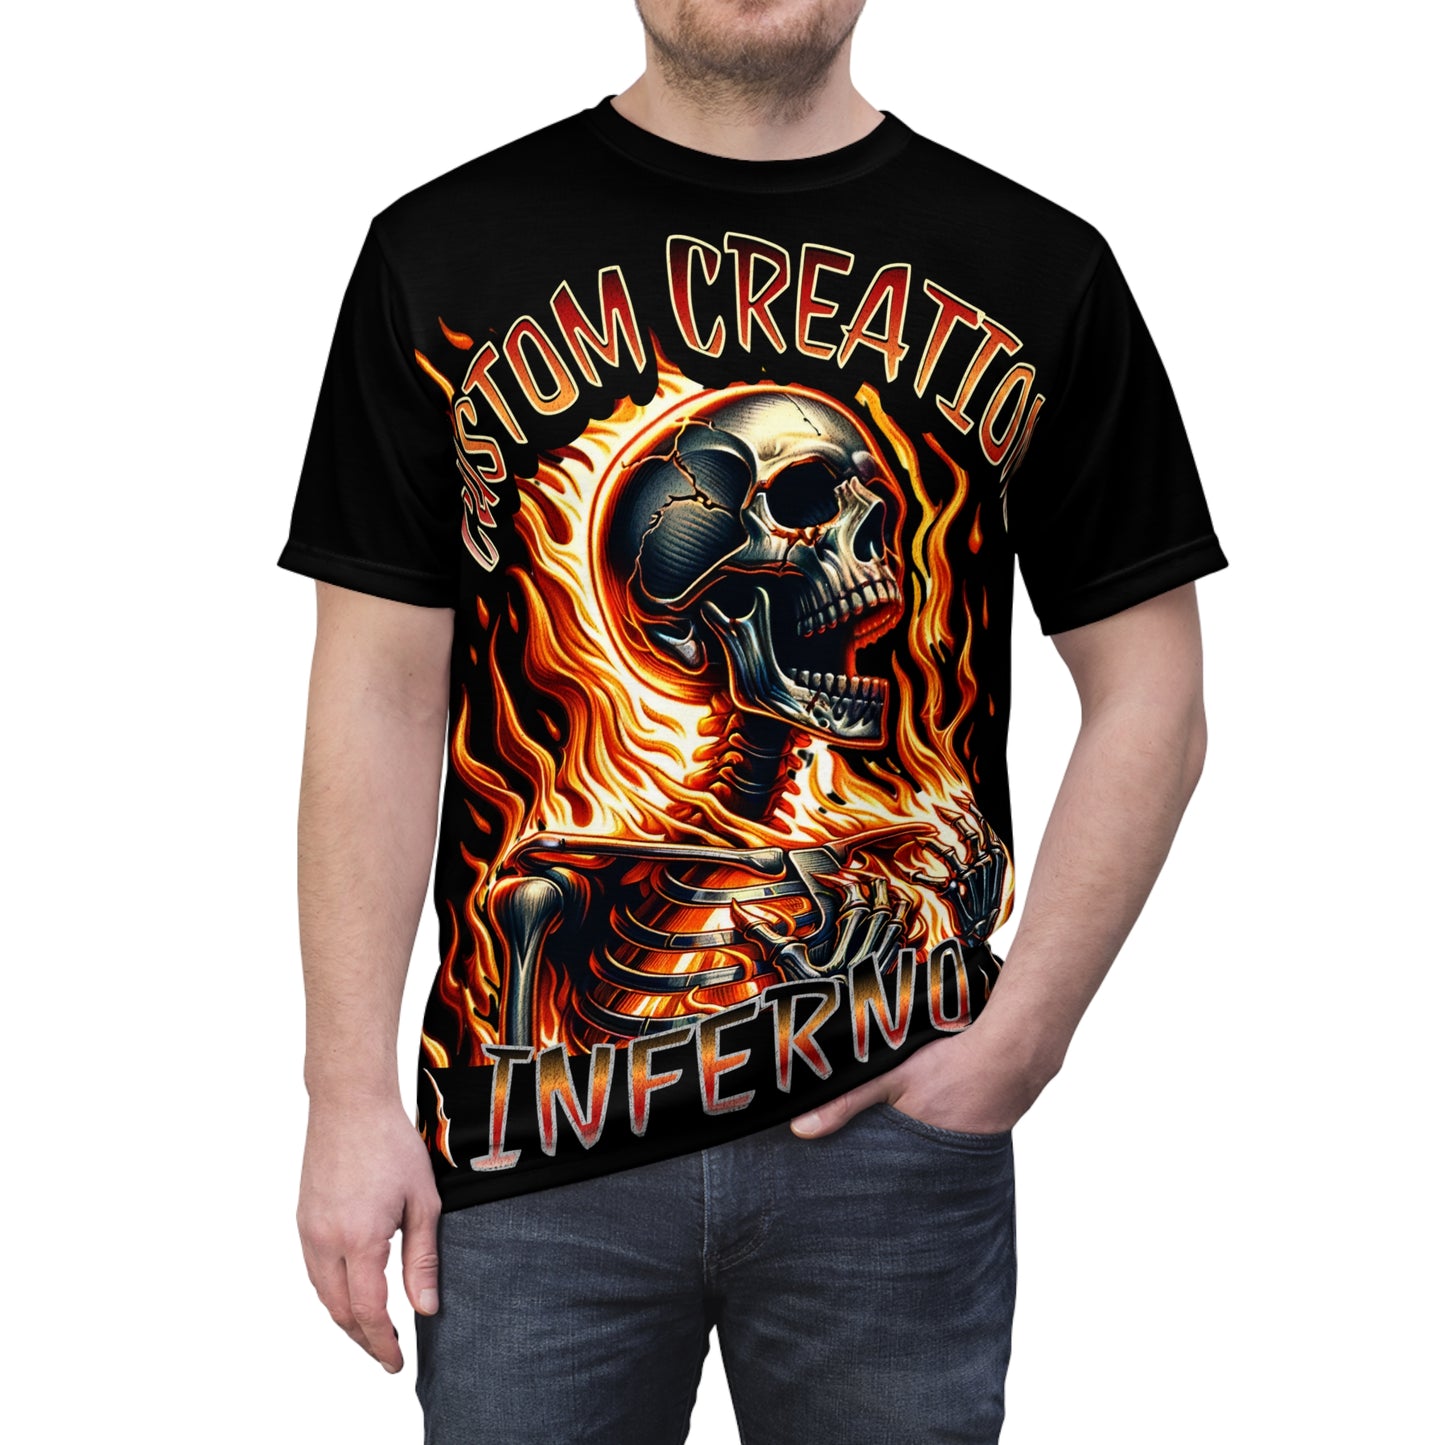 Custom creations T-shirt ( Inferno )